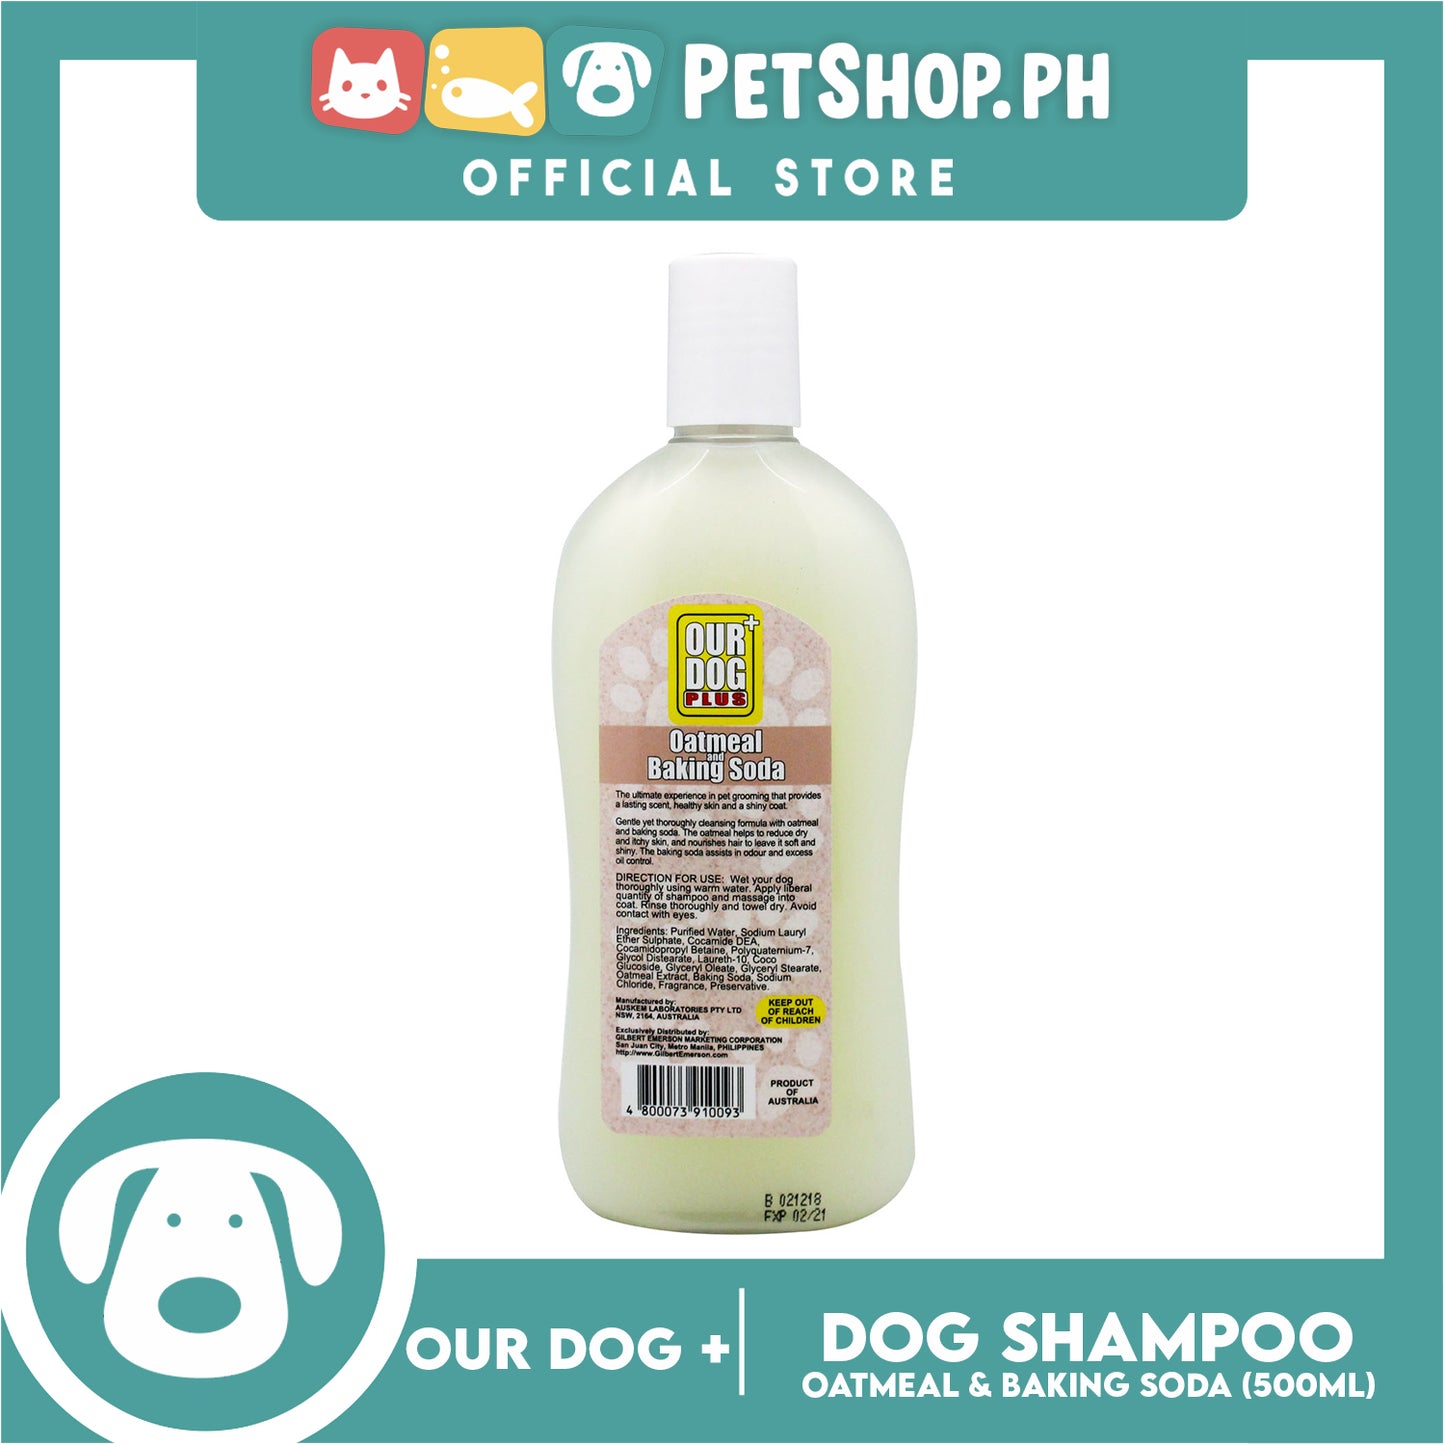 Our Dog Plus Oatmeal and Baking Soda Shampoo